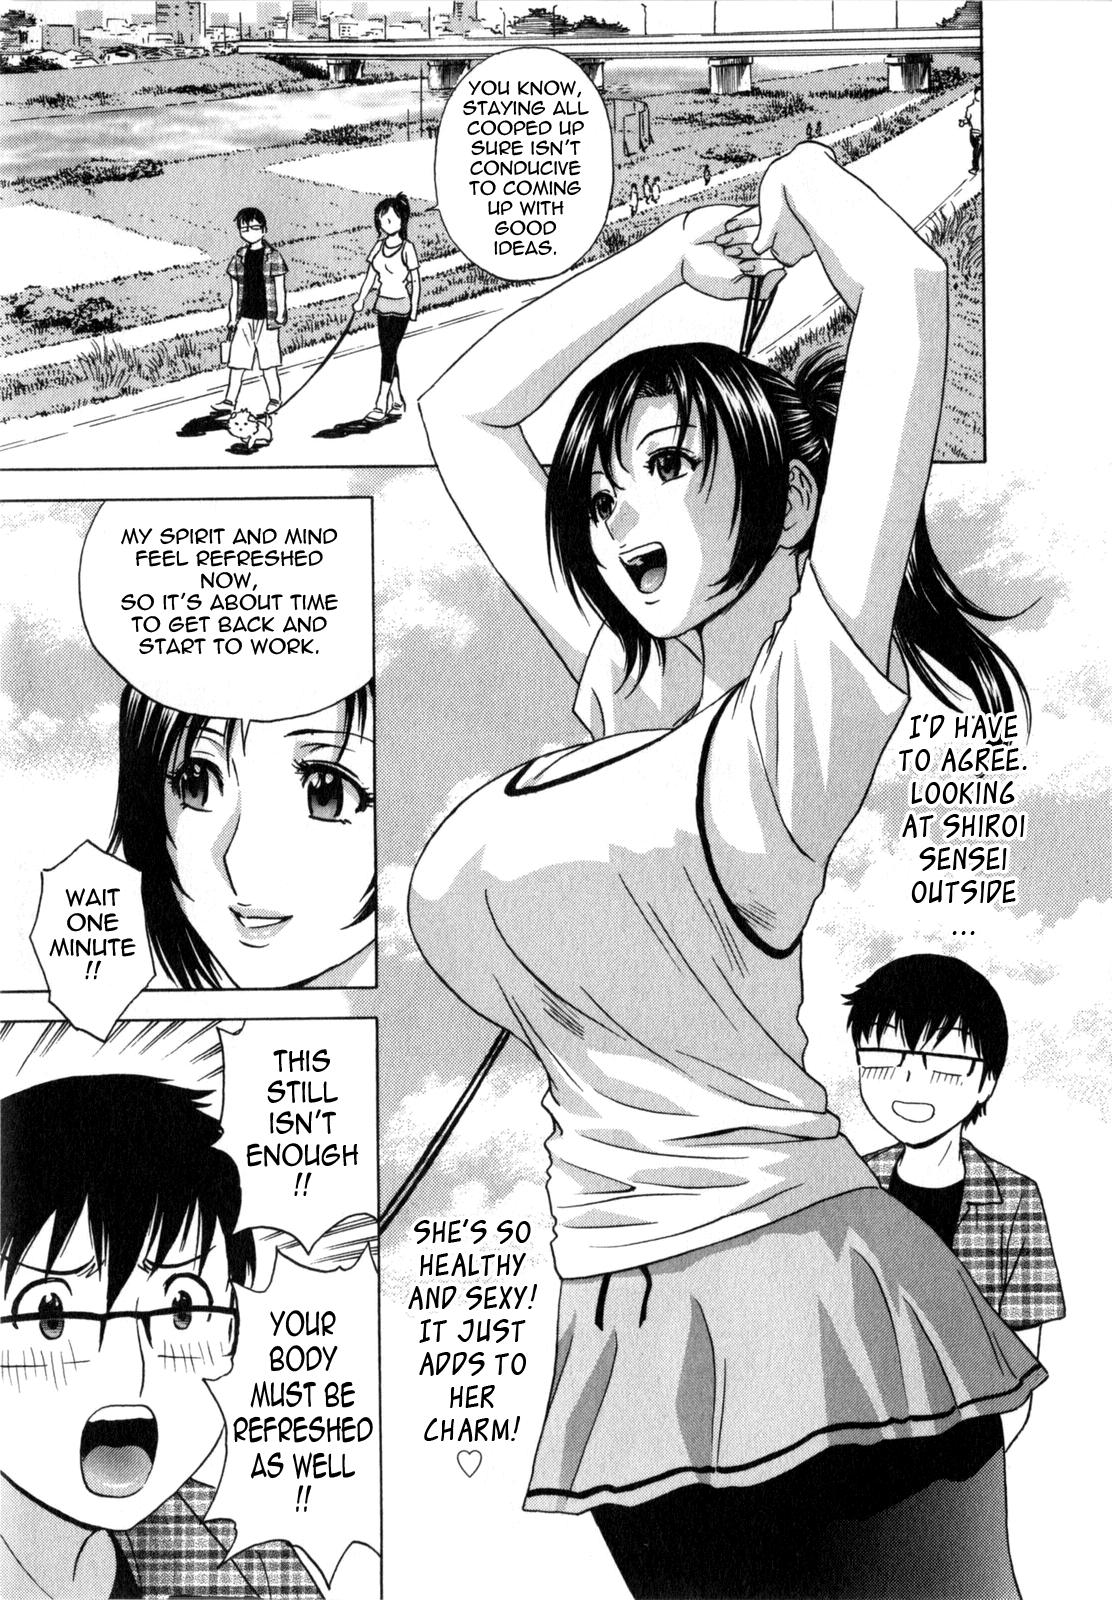 Life with Married Women Just Like a Manga 1 139